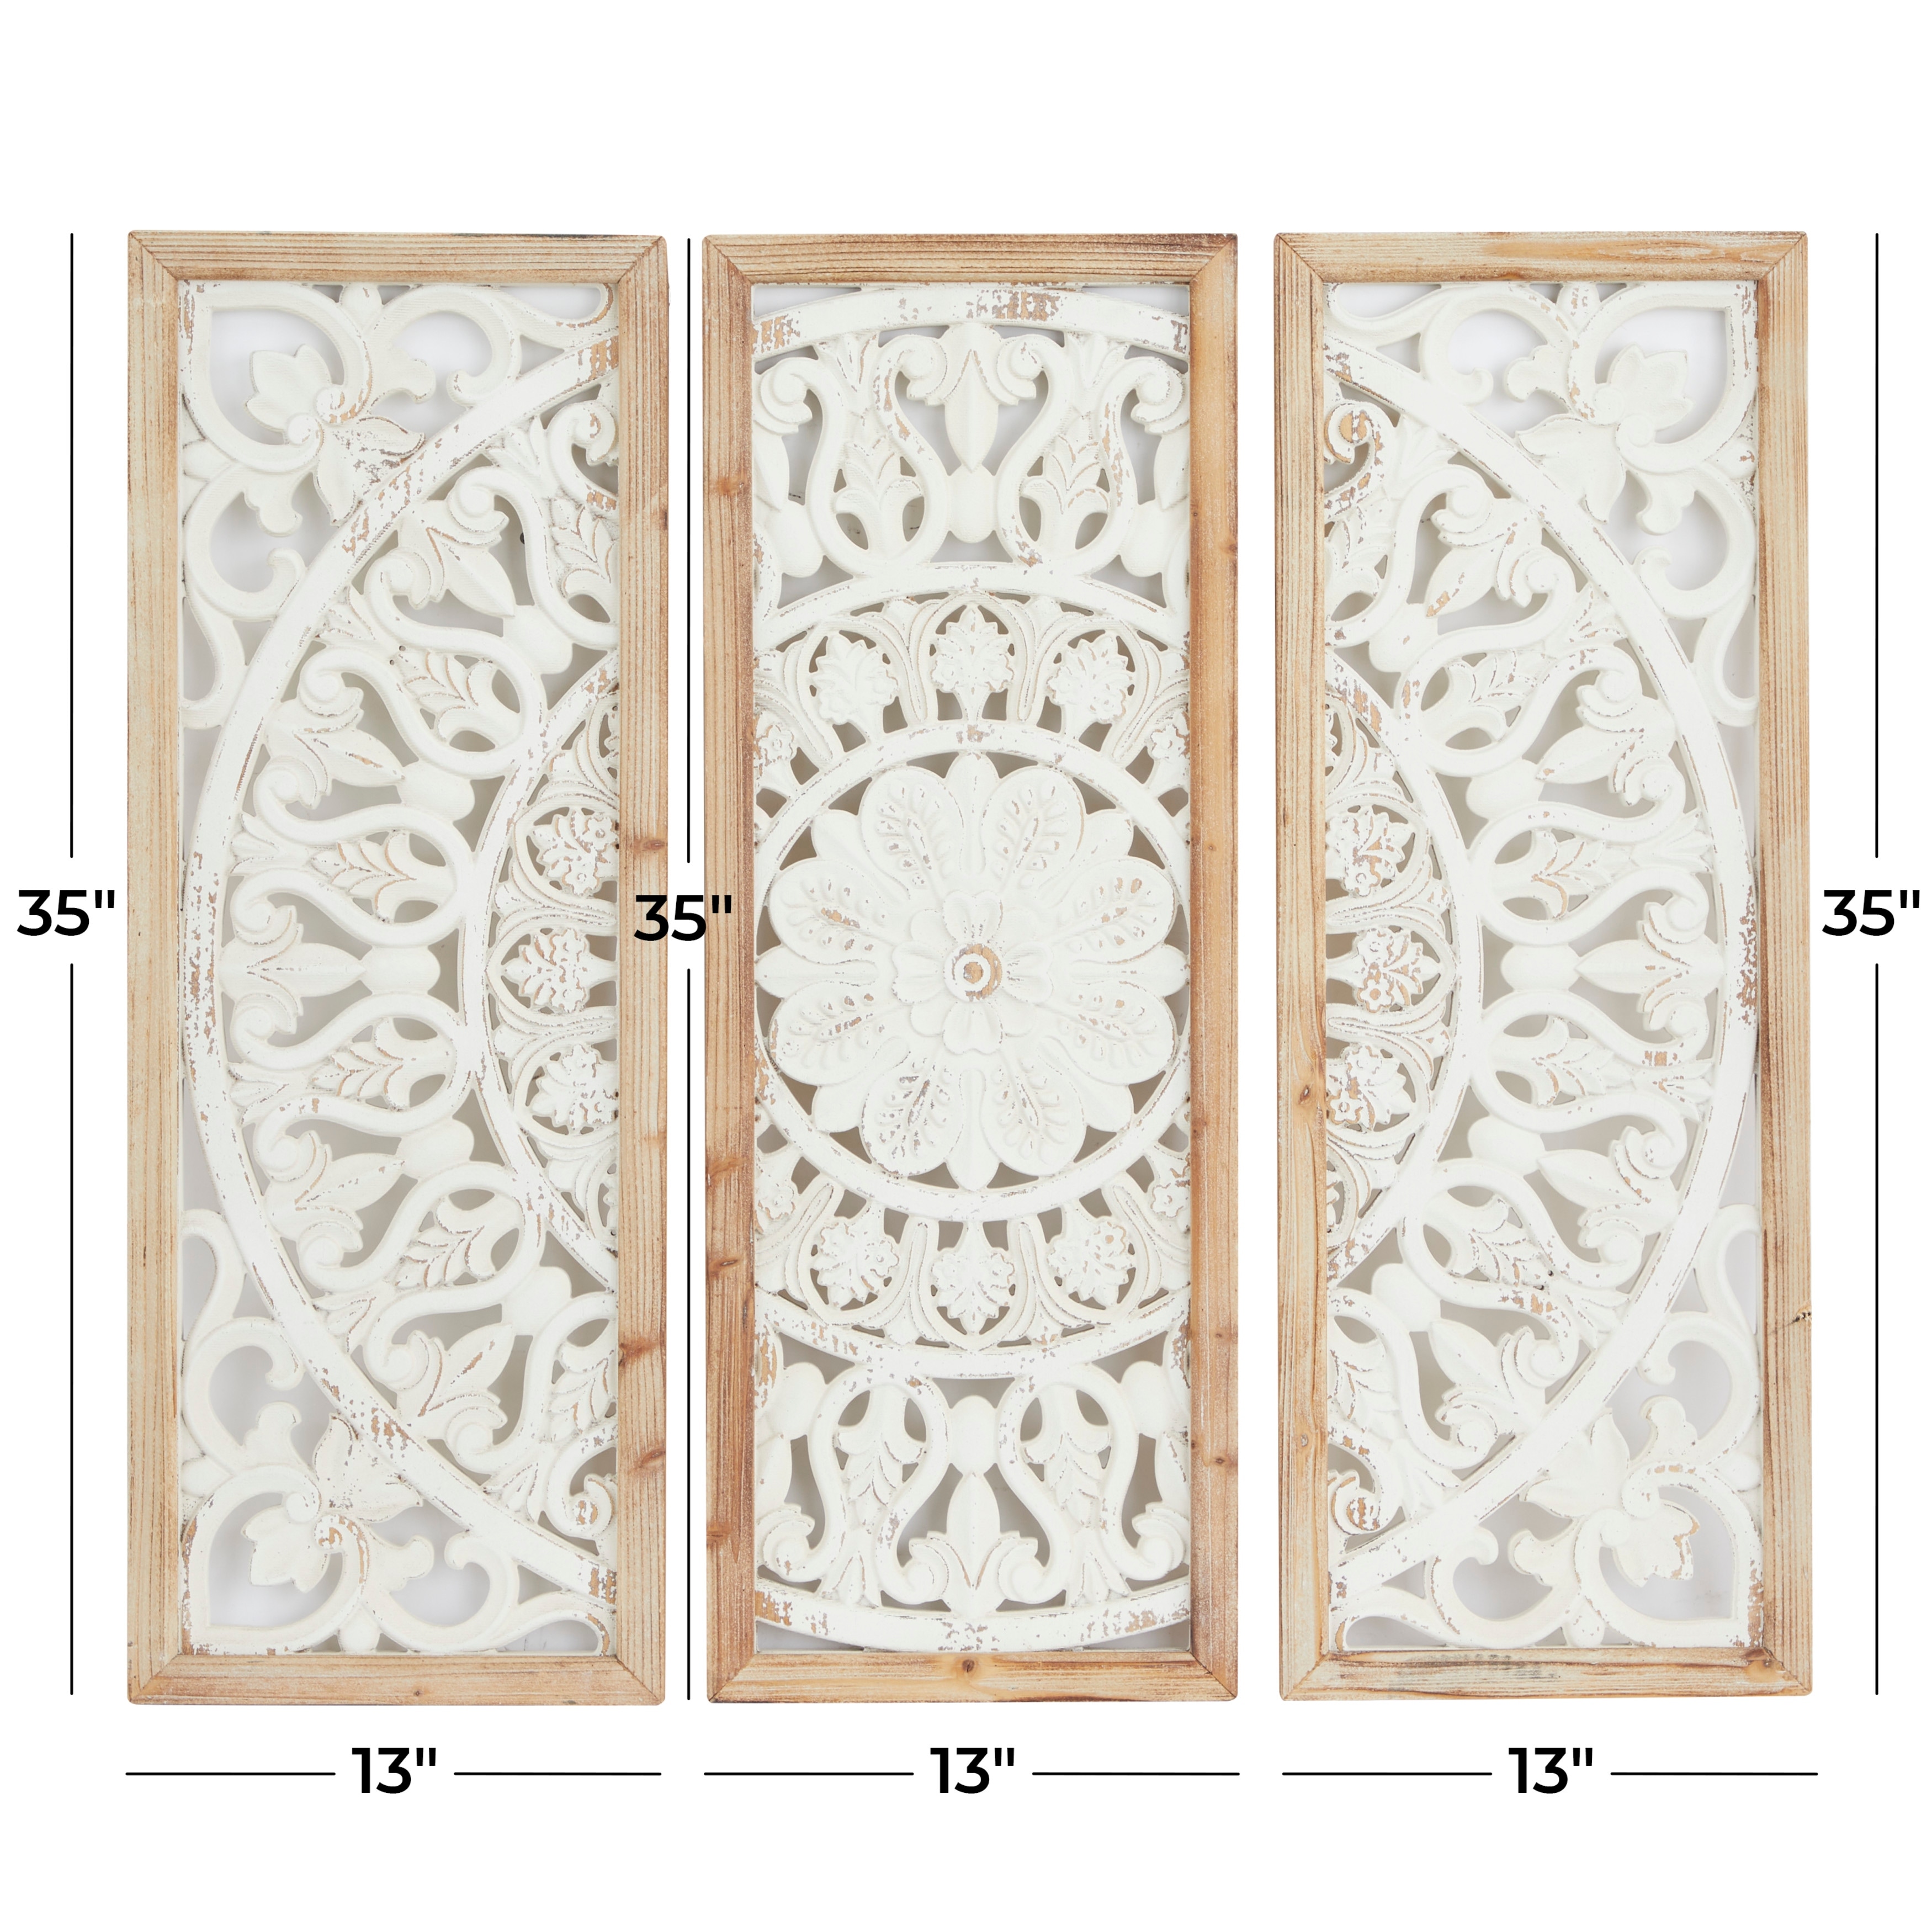 Details about   Large Decorative Faux Stone Floral Carved Medallion Set/3 Wall Art Panels Decor 